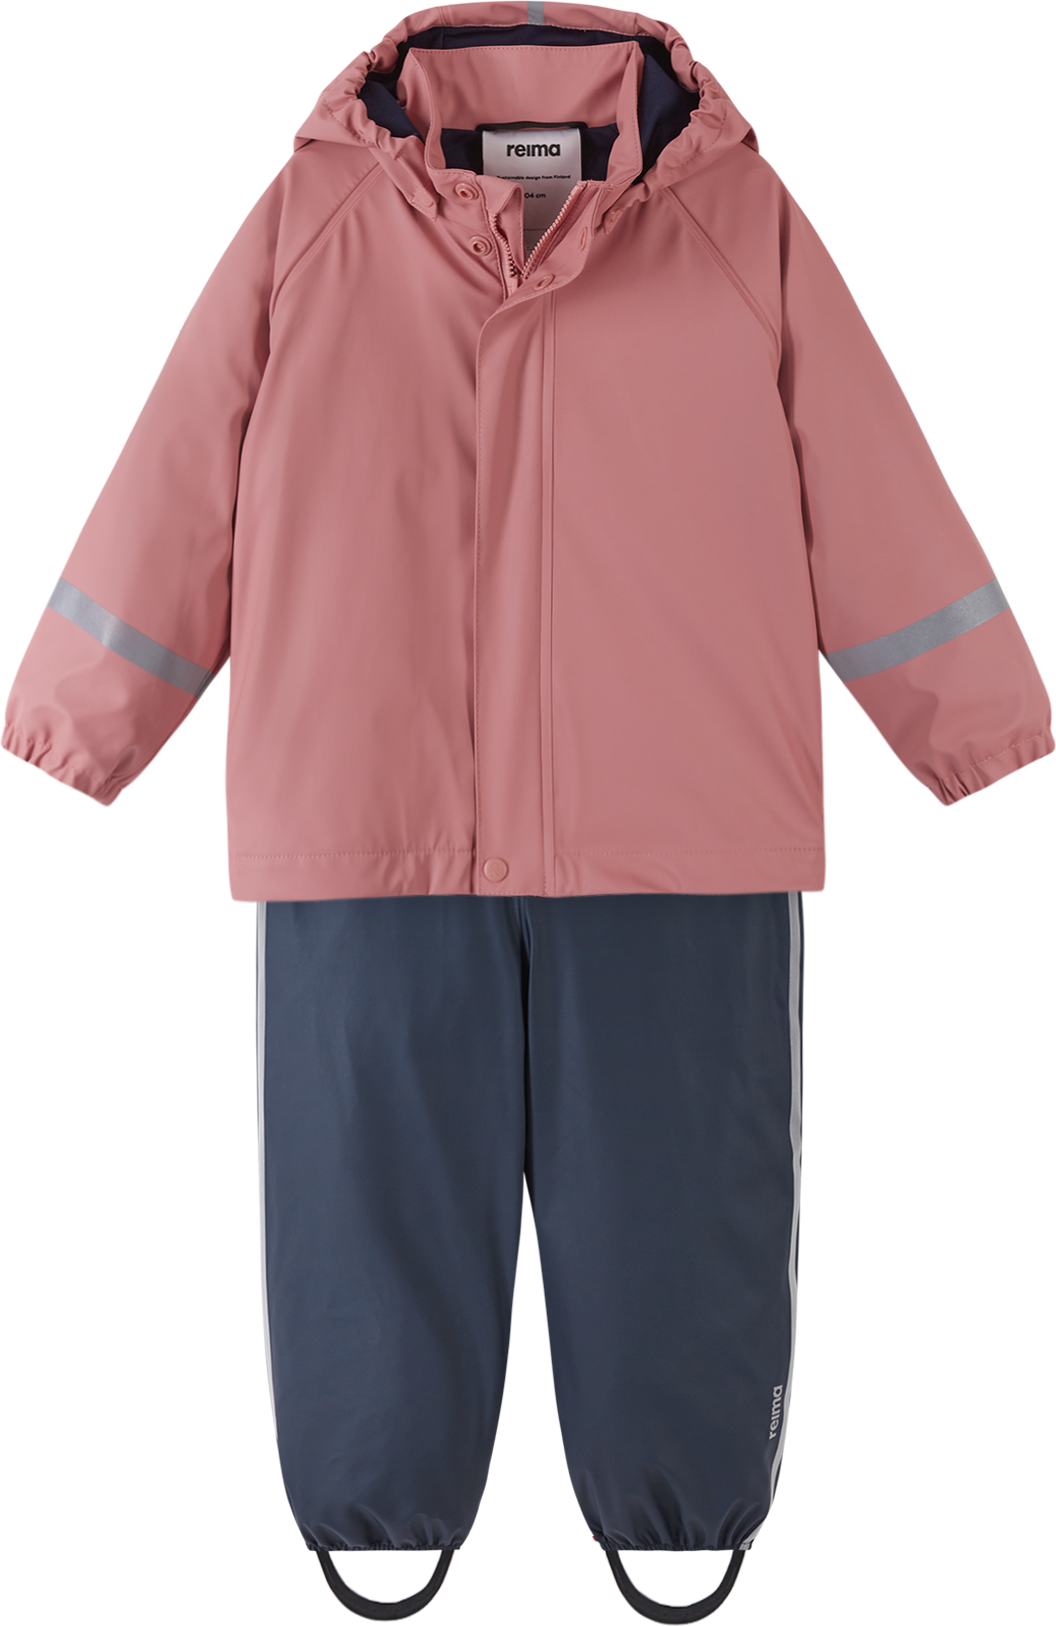 Reima Kids' Tipotella Rain Outfit Rose Blush 92 cm, Rose Blush